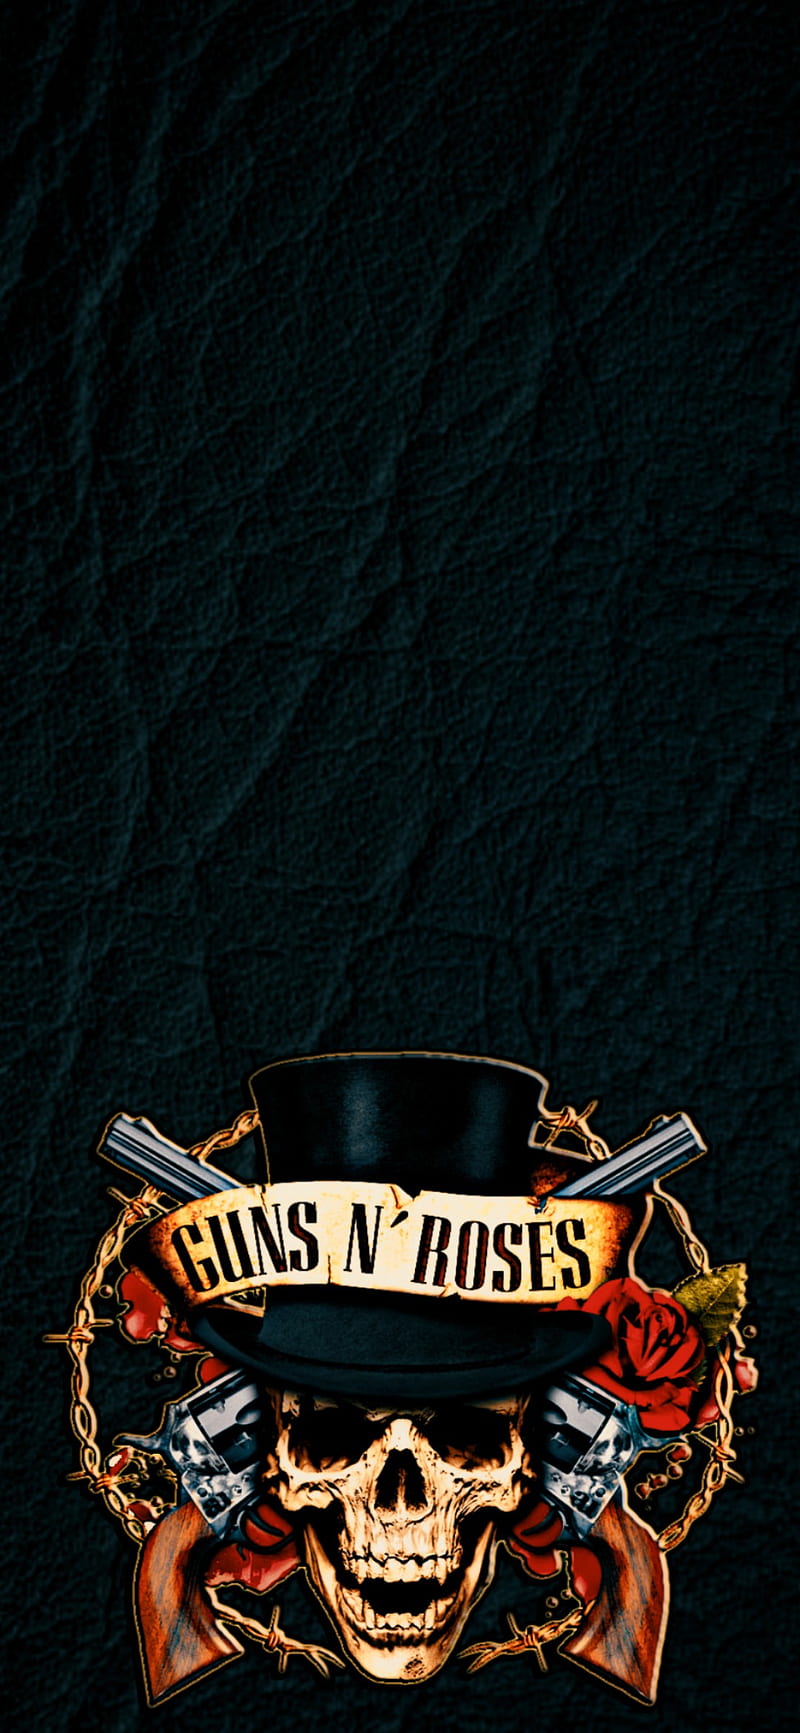 Rockers BR Guns N' Roses Wallpapers Logo Desktop Background